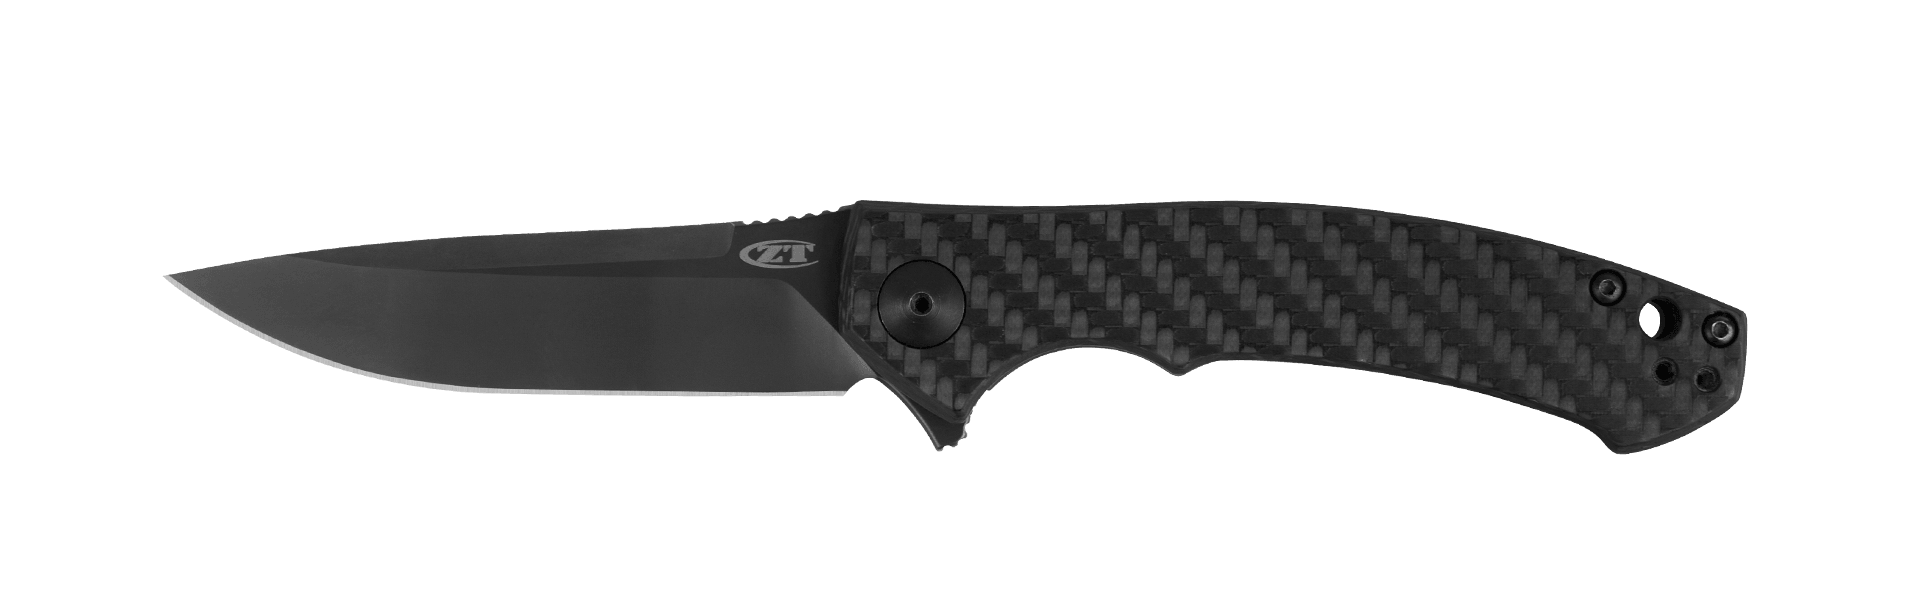 Zero Tolerance Sinkevich Framelock CF & Titanium KVT Black DLC Coated S35VN - Knives.mx